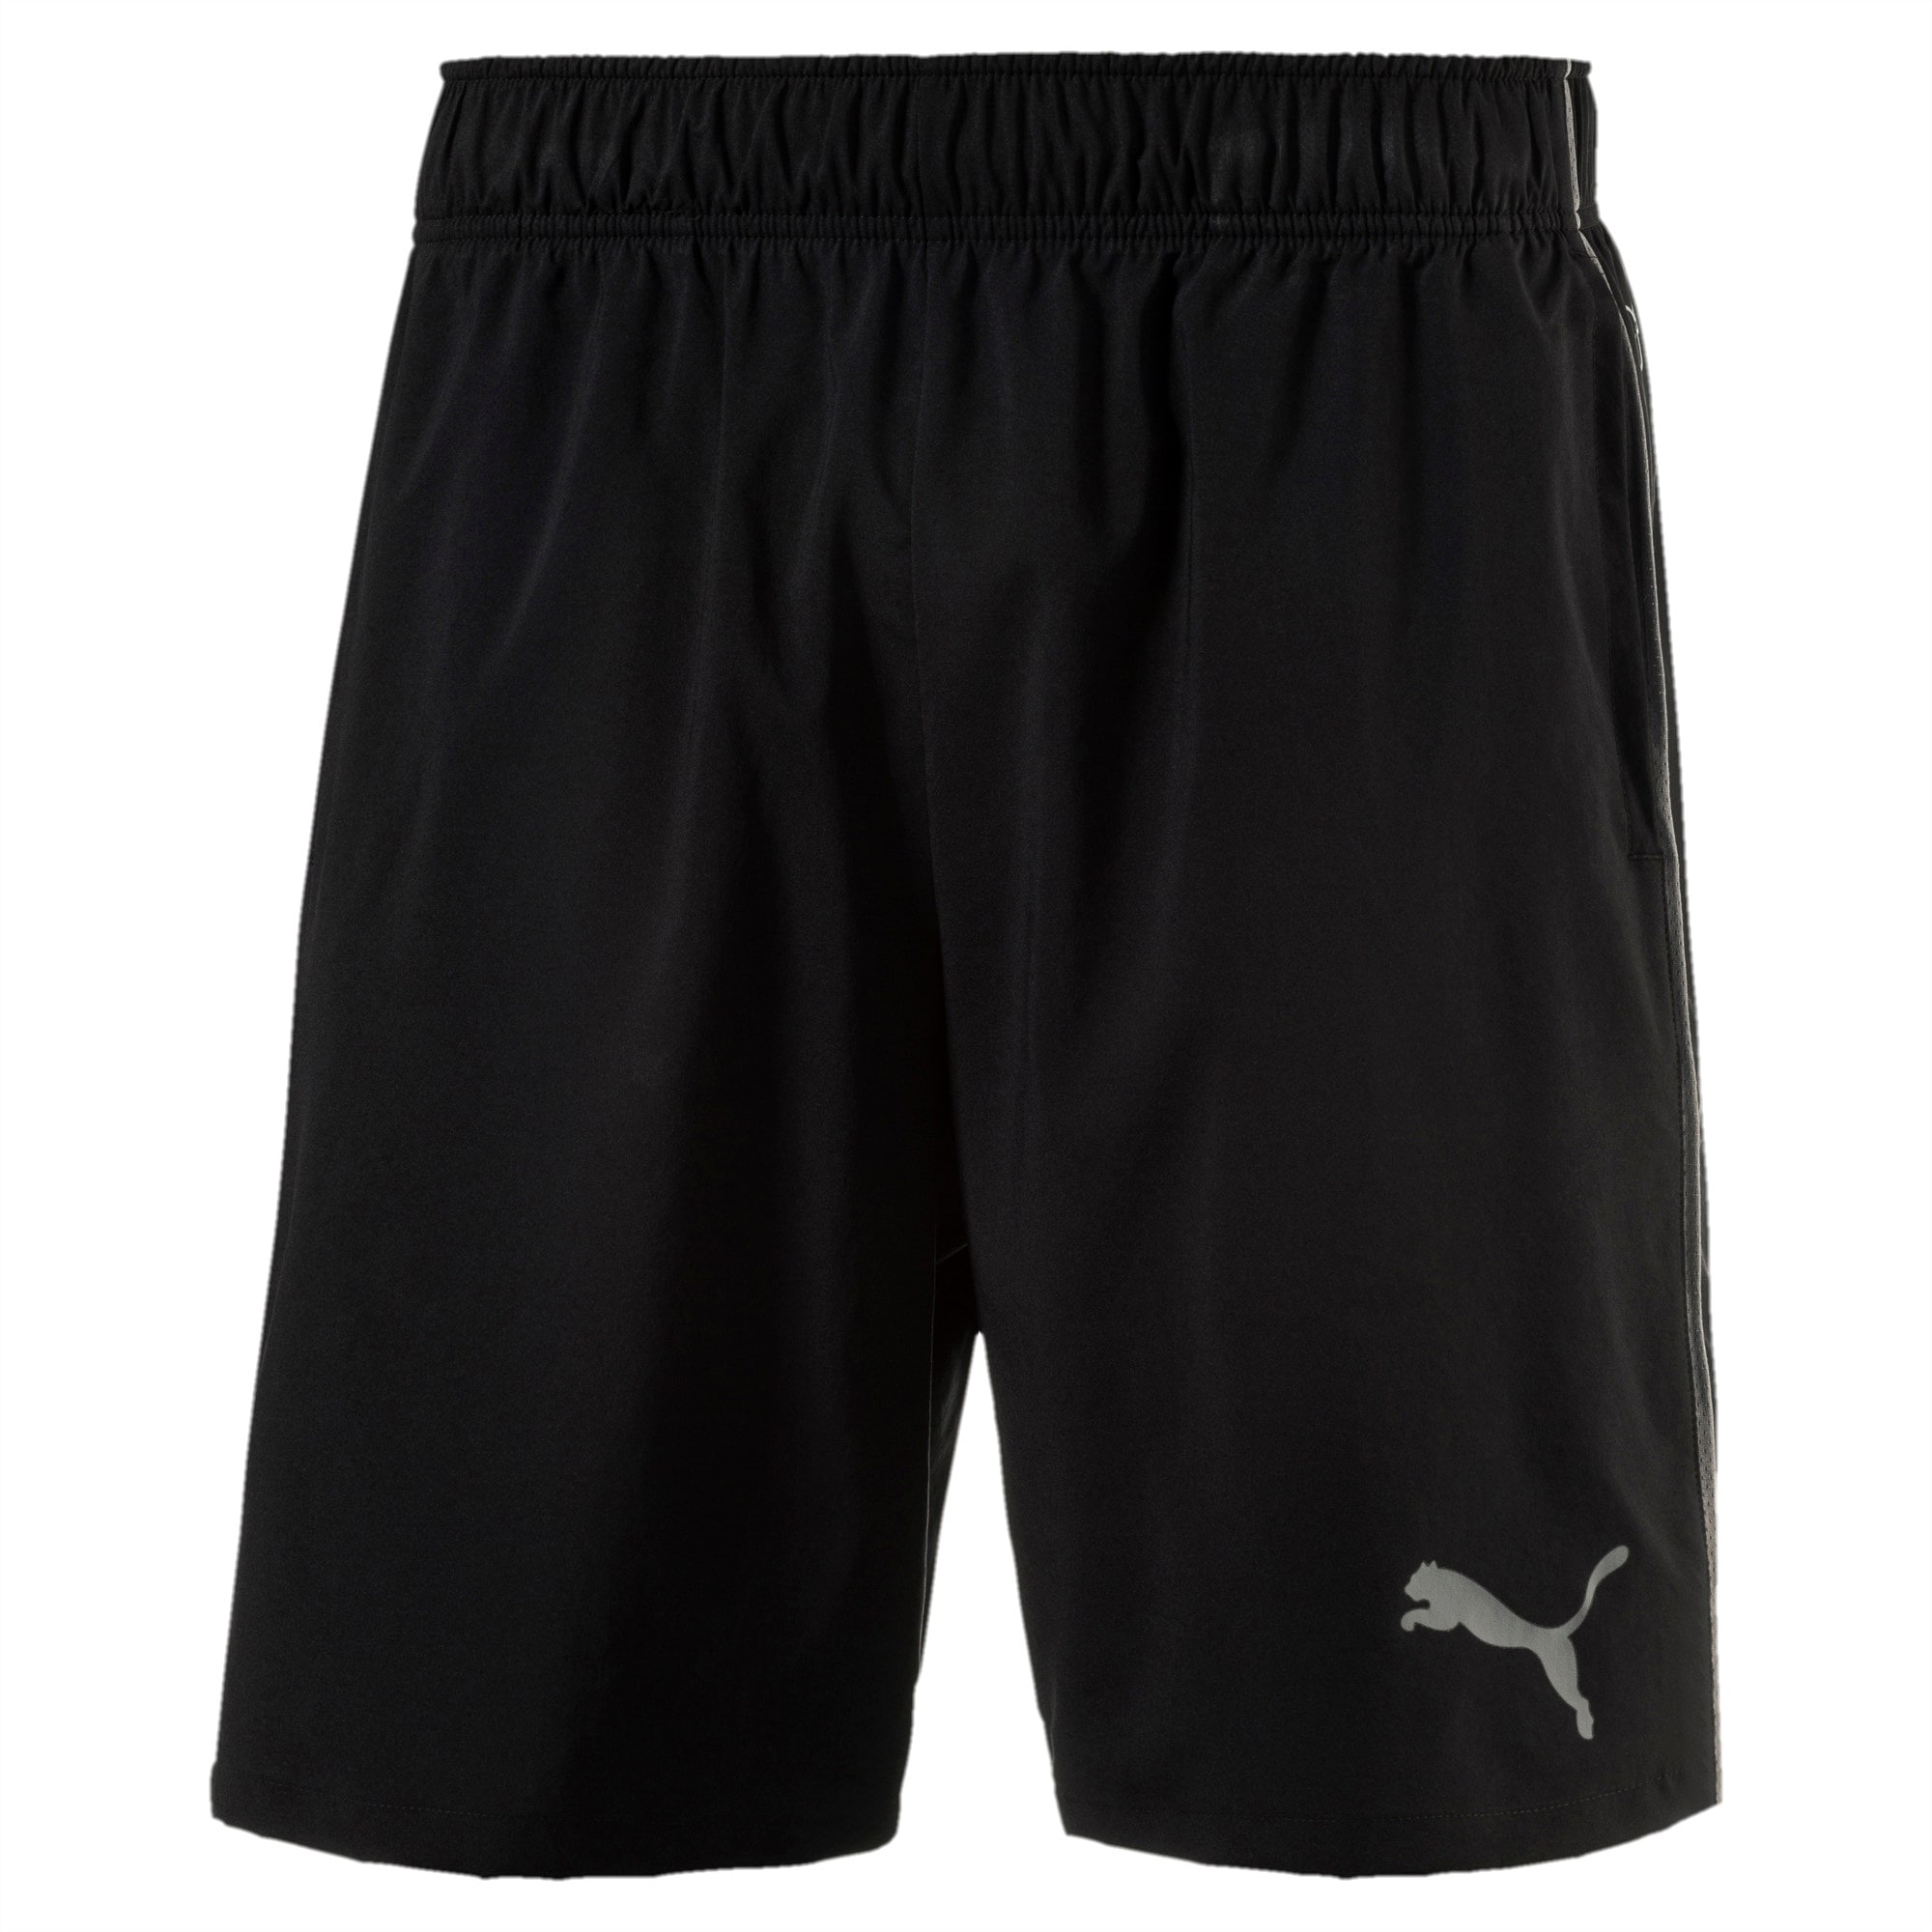 Woven Shorts | Puma Black-quiet shade 